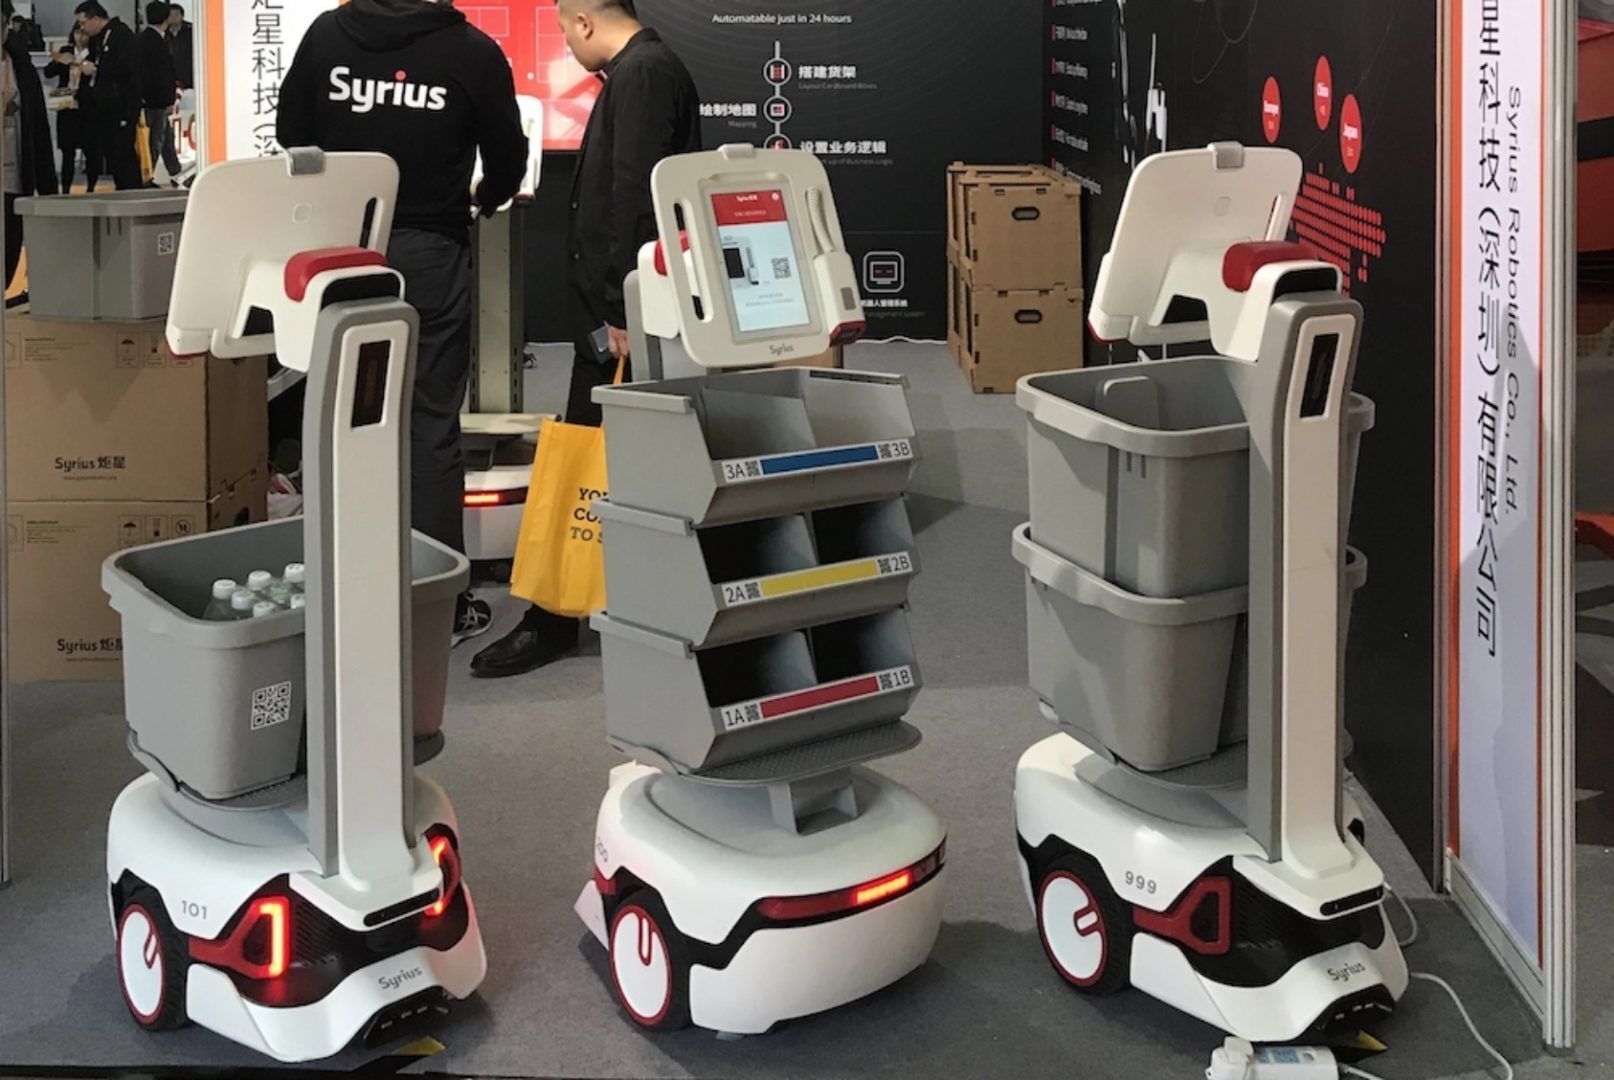 A Shenzhen logistics robot startup shows why China is winning global tech race · TechNode